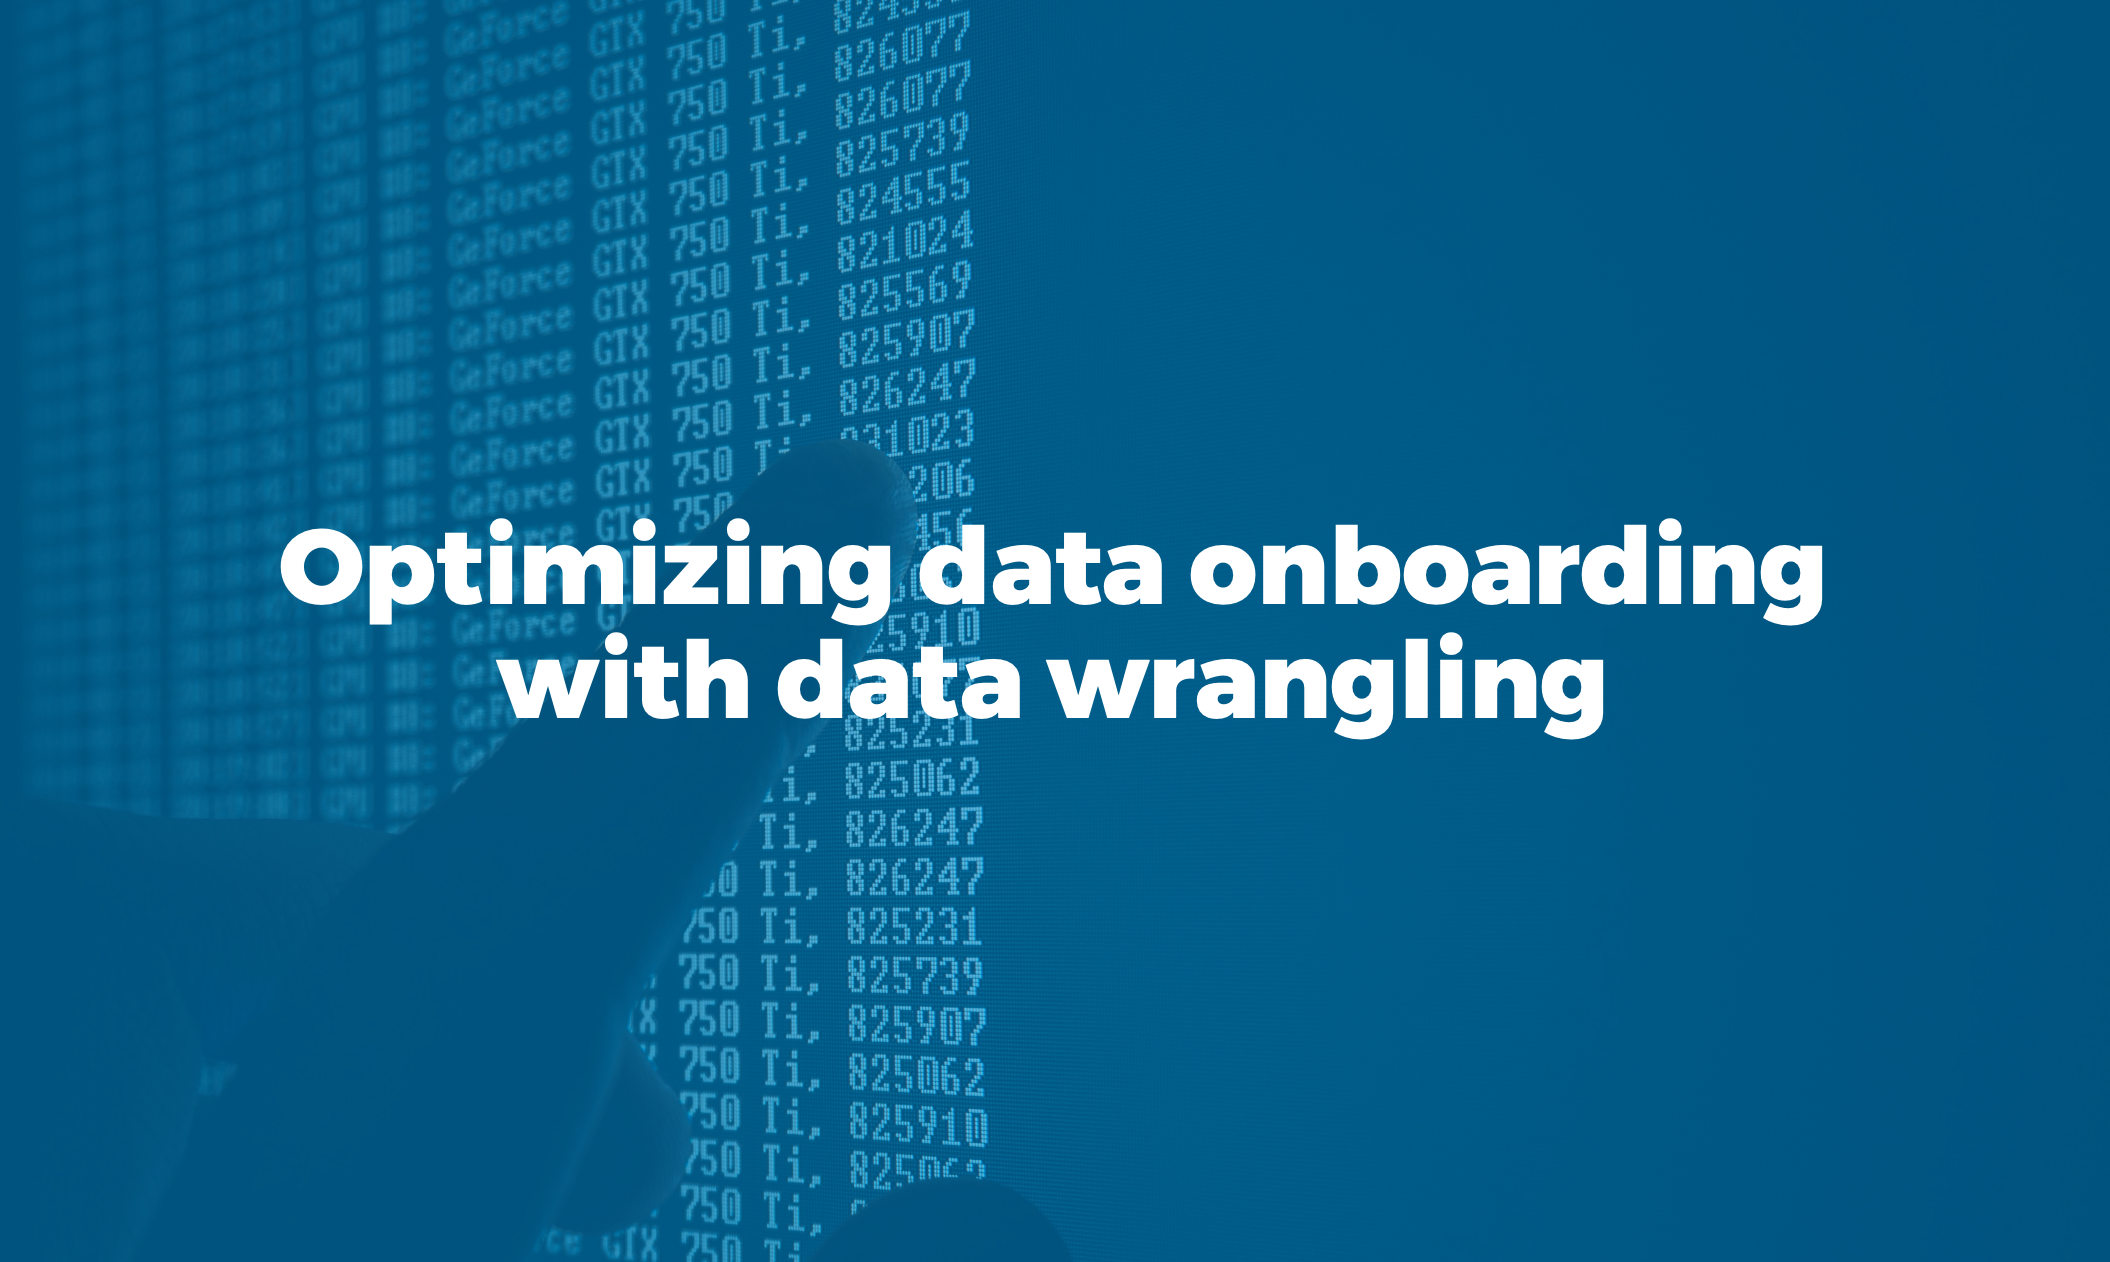 Bismart BI optimizing data onboarding with data wrangling in azure